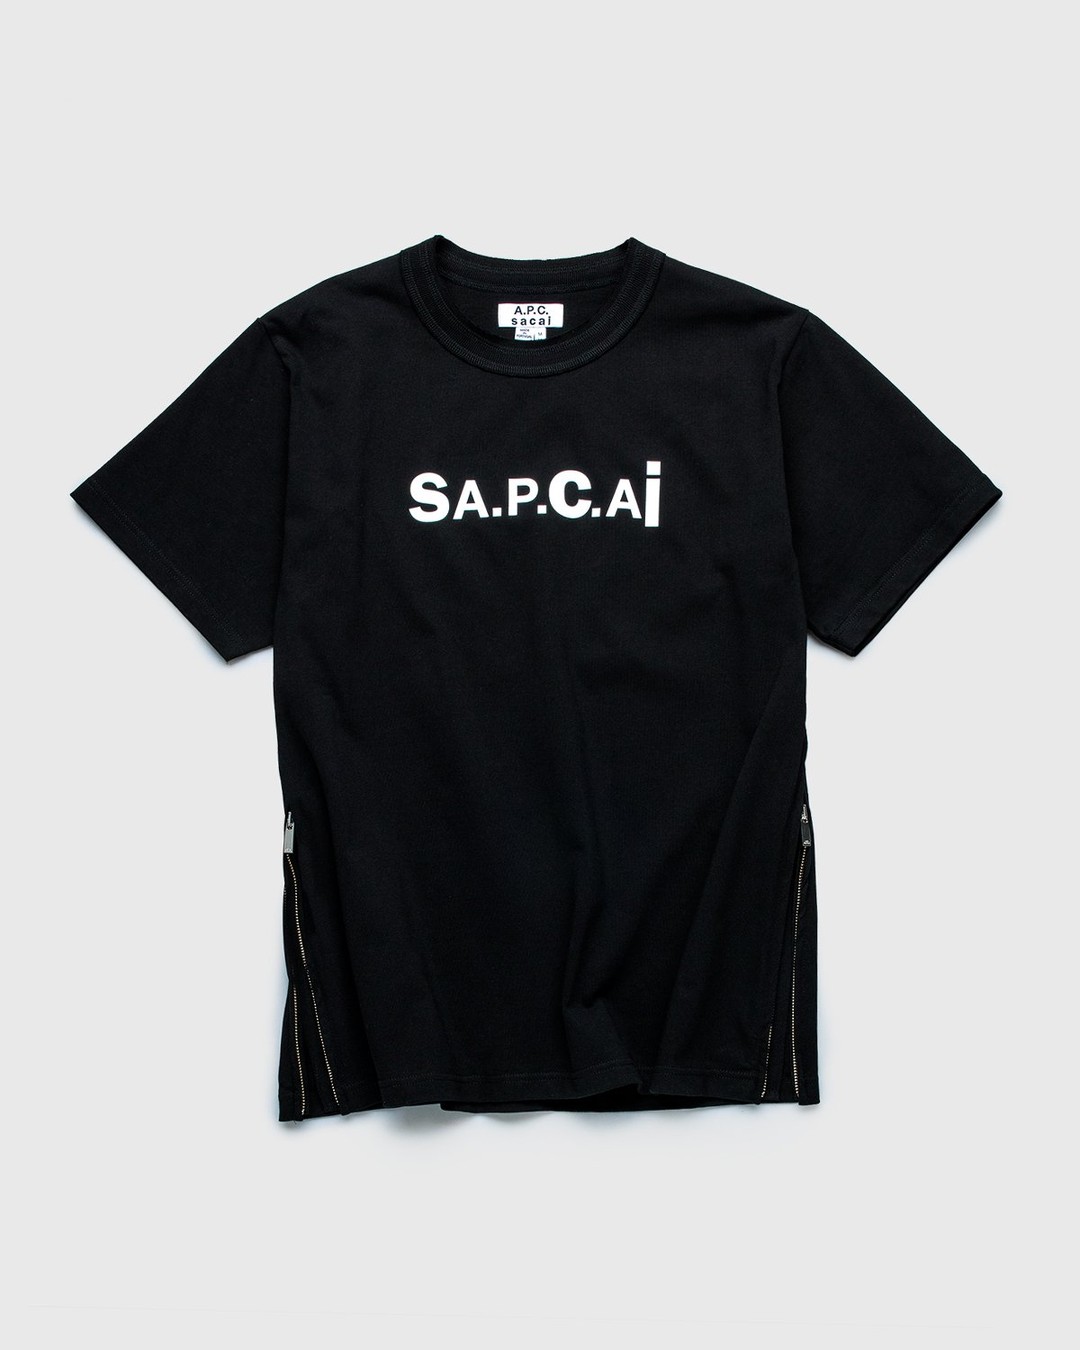 A.P.C. x Sacai – Kiyo T-Shirt Black - Tops - Black - Image 1